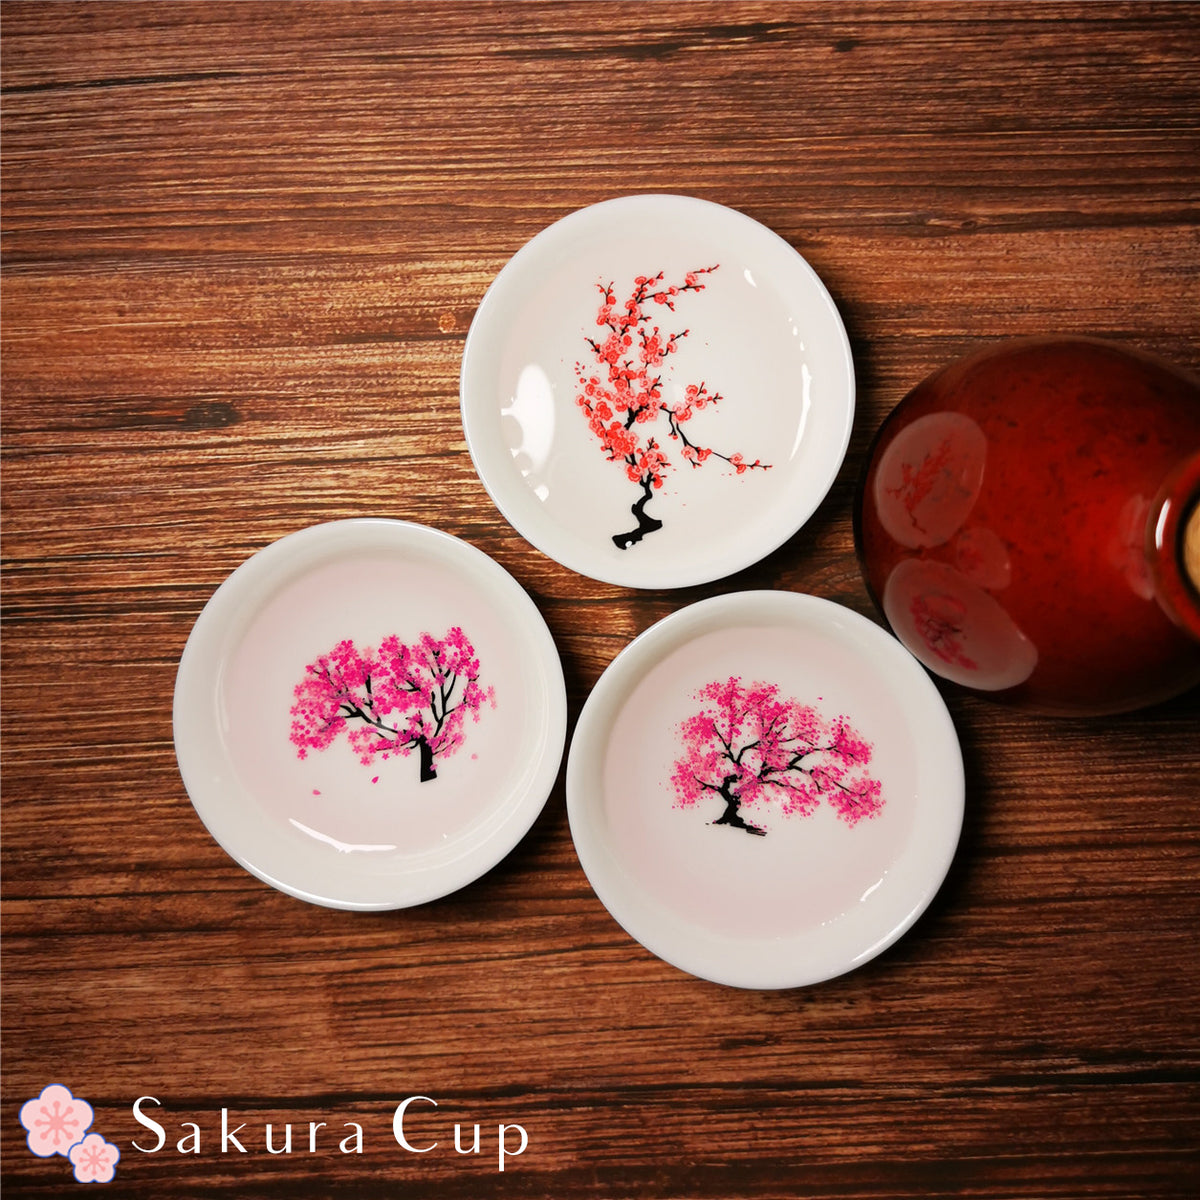 Magic Sakura Cherry Blossom Sake Cup Gift Set